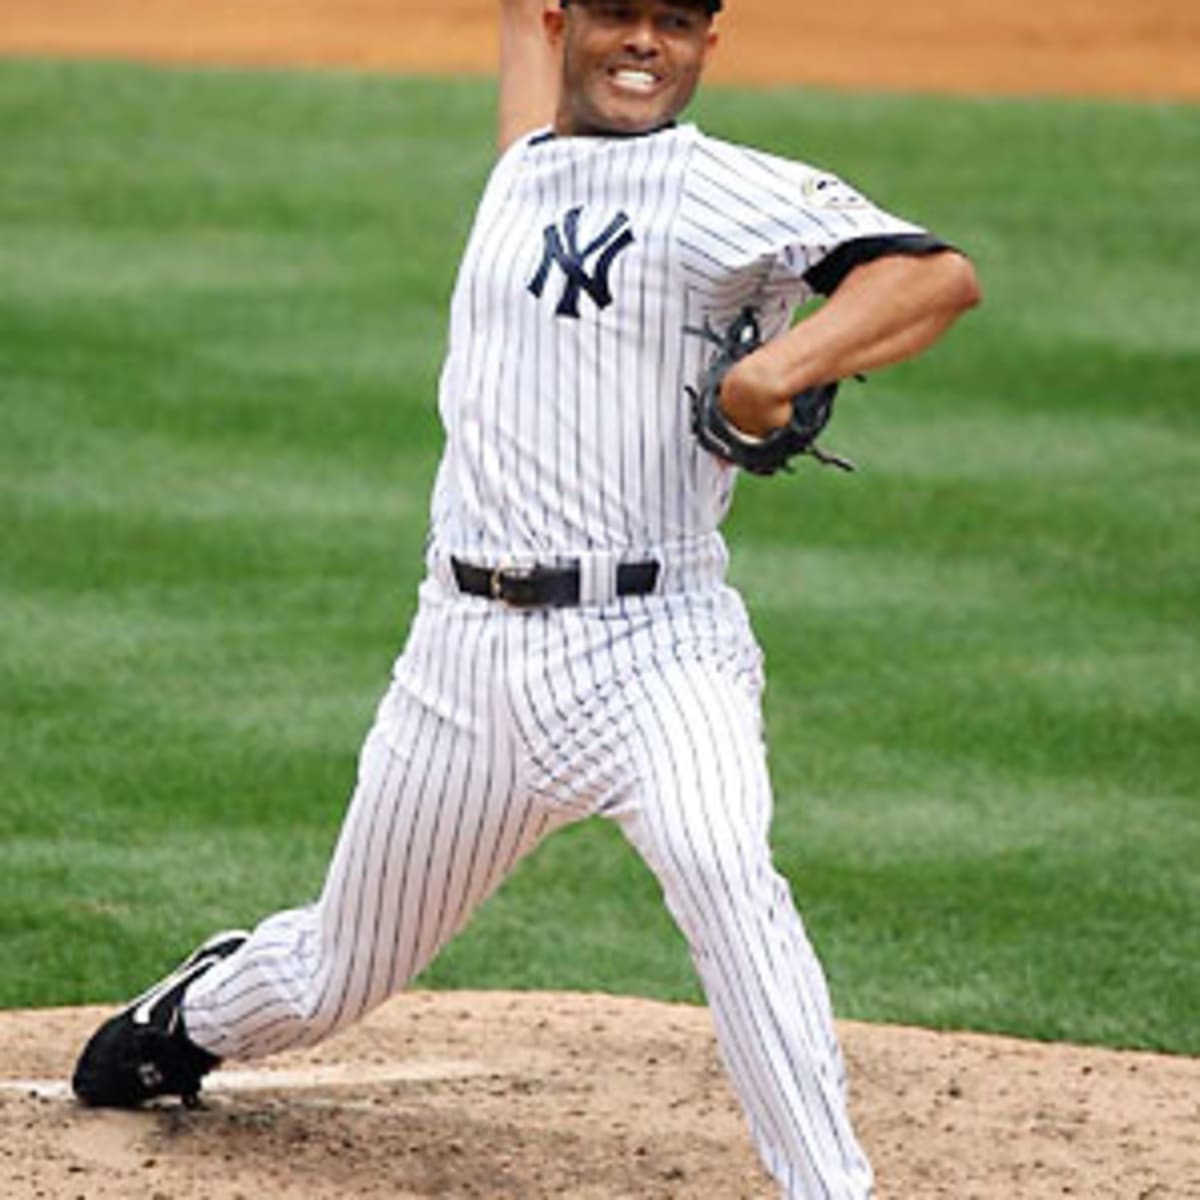 Joe Posnanski: Mariano Rivera's a true Yankee, almost mythical in